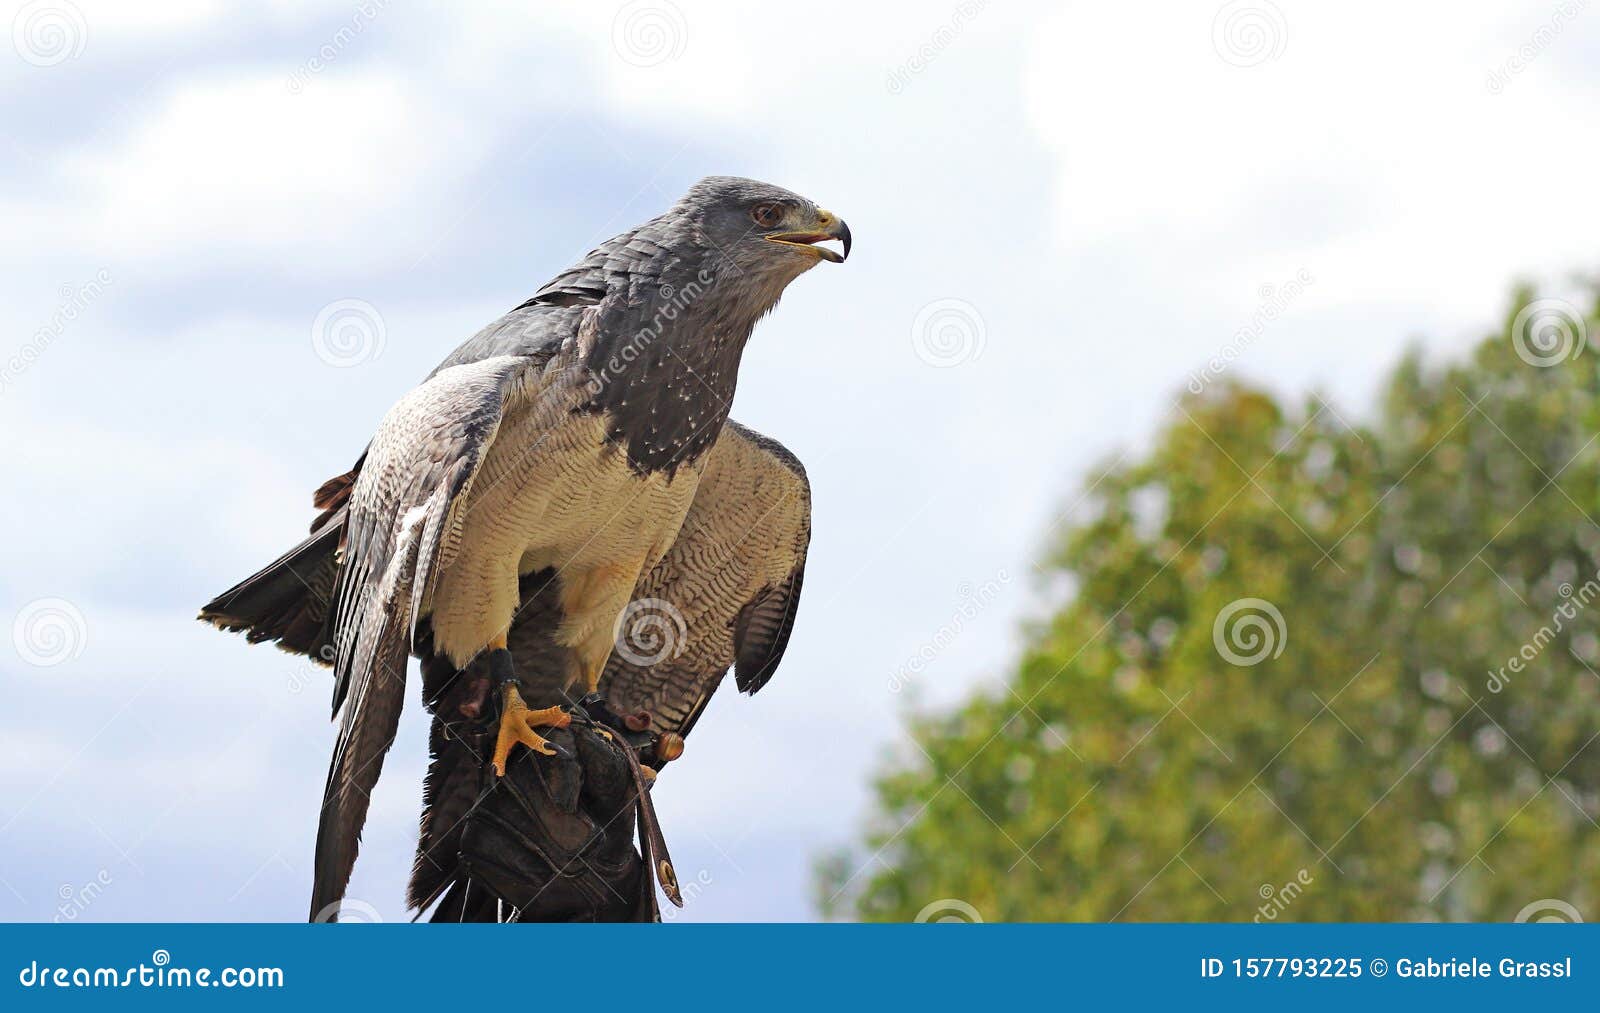 bird of prey aguja sitting on a falconer glove